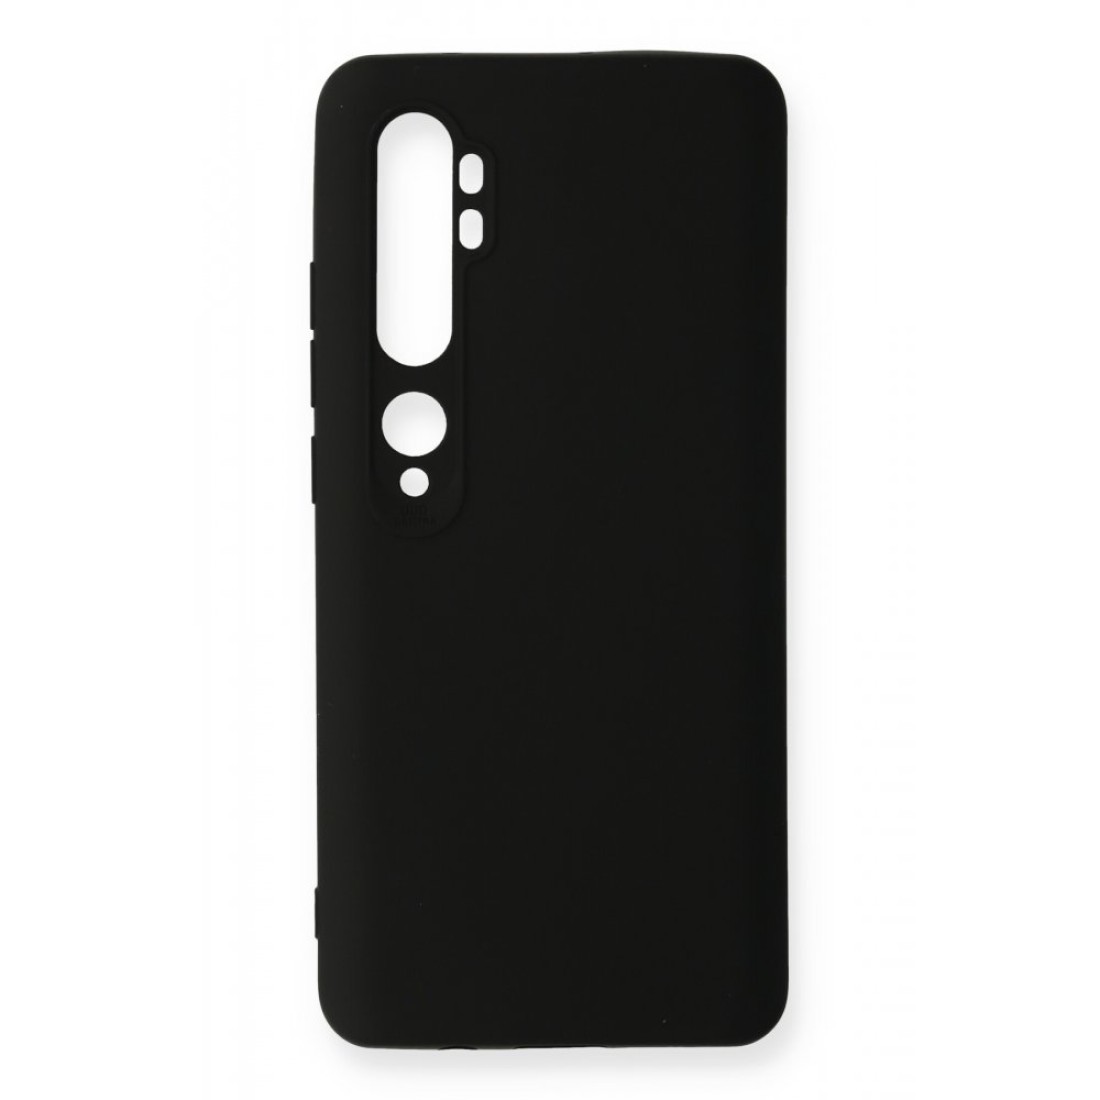 Xiaomi Mi Note 10 Kılıf Premium Rubber Silikon - Siyah